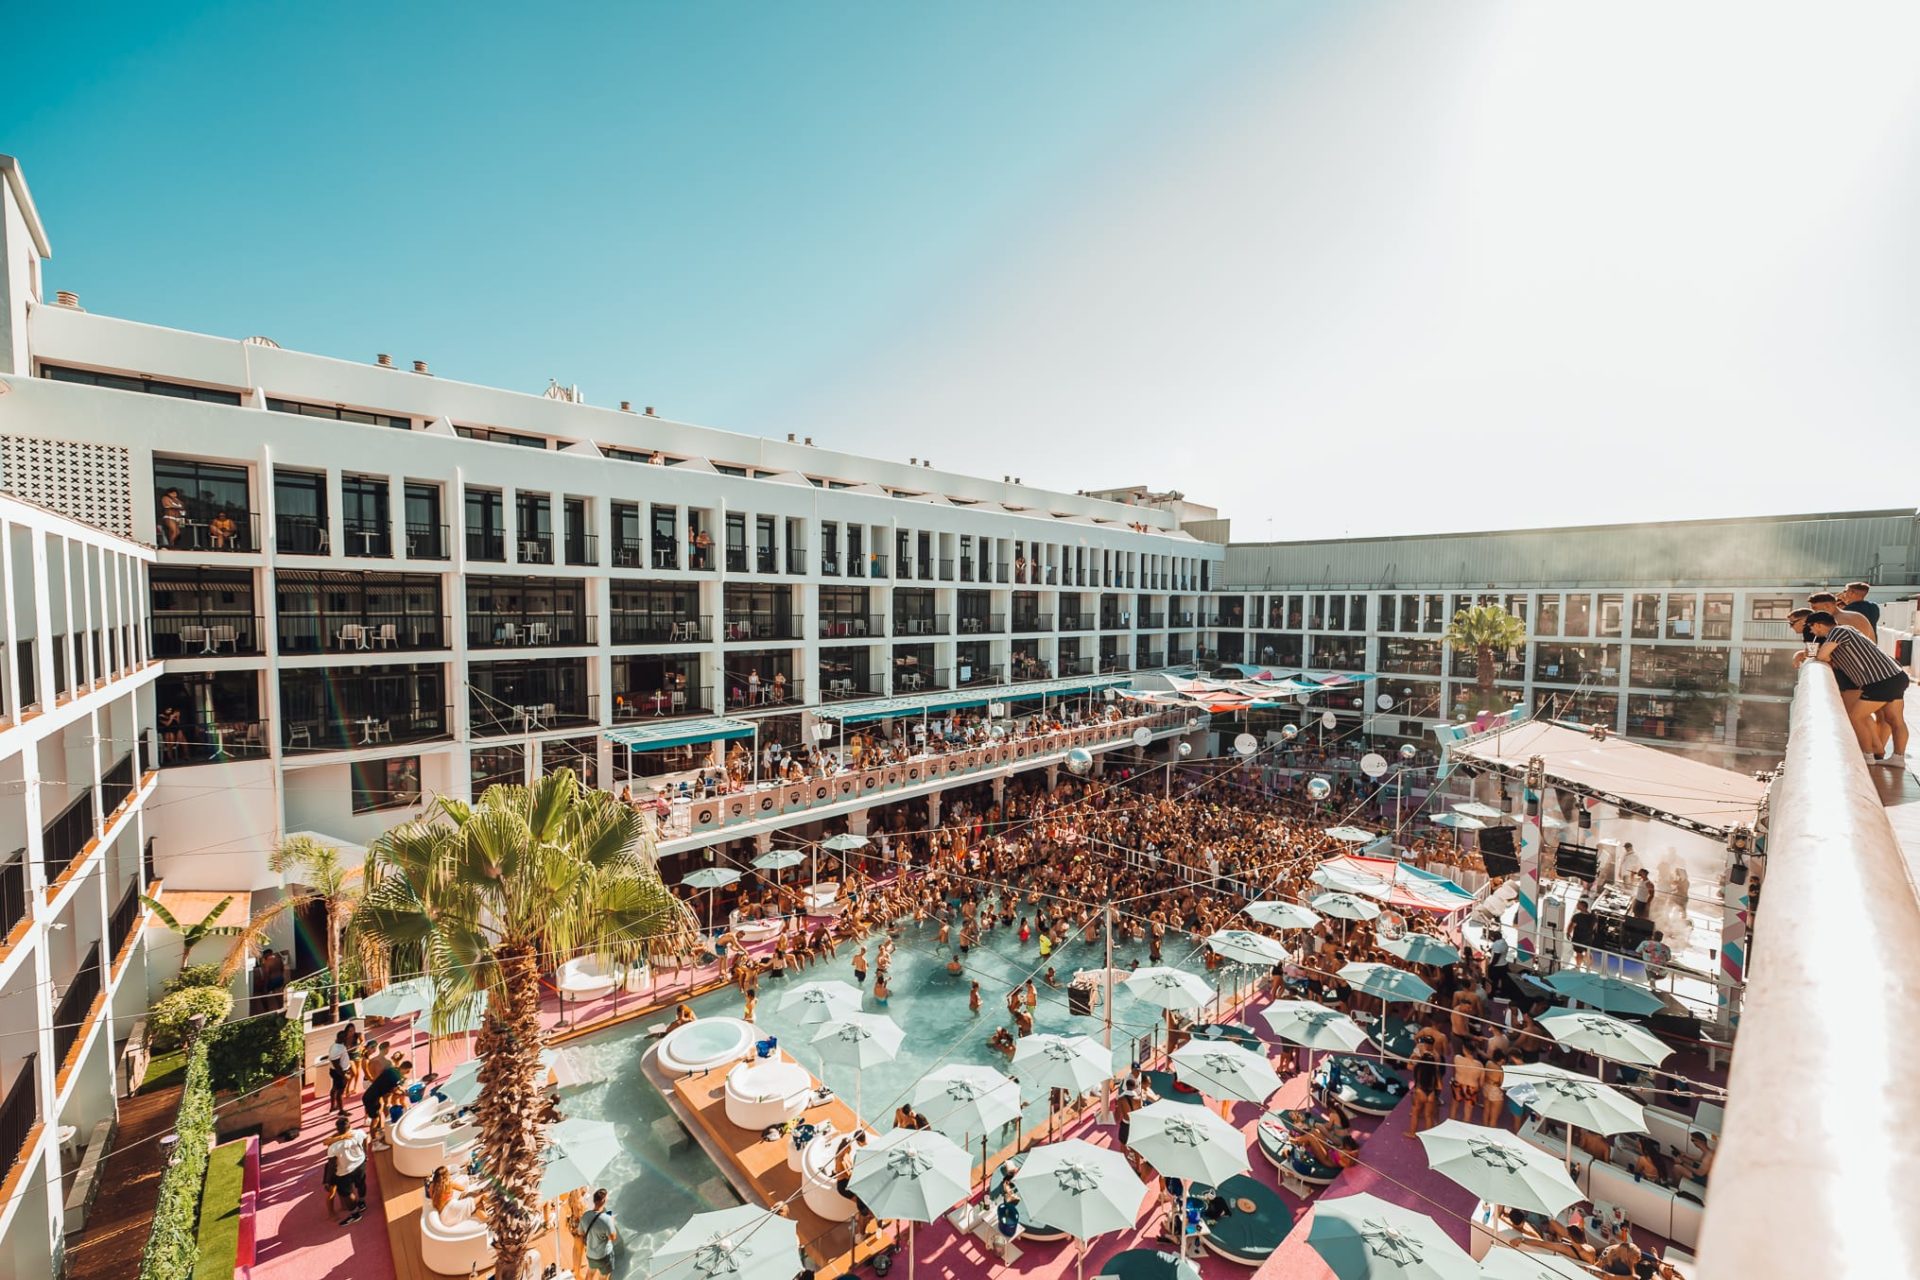 Poolparty-Location im Ibiza Rocks Hotel